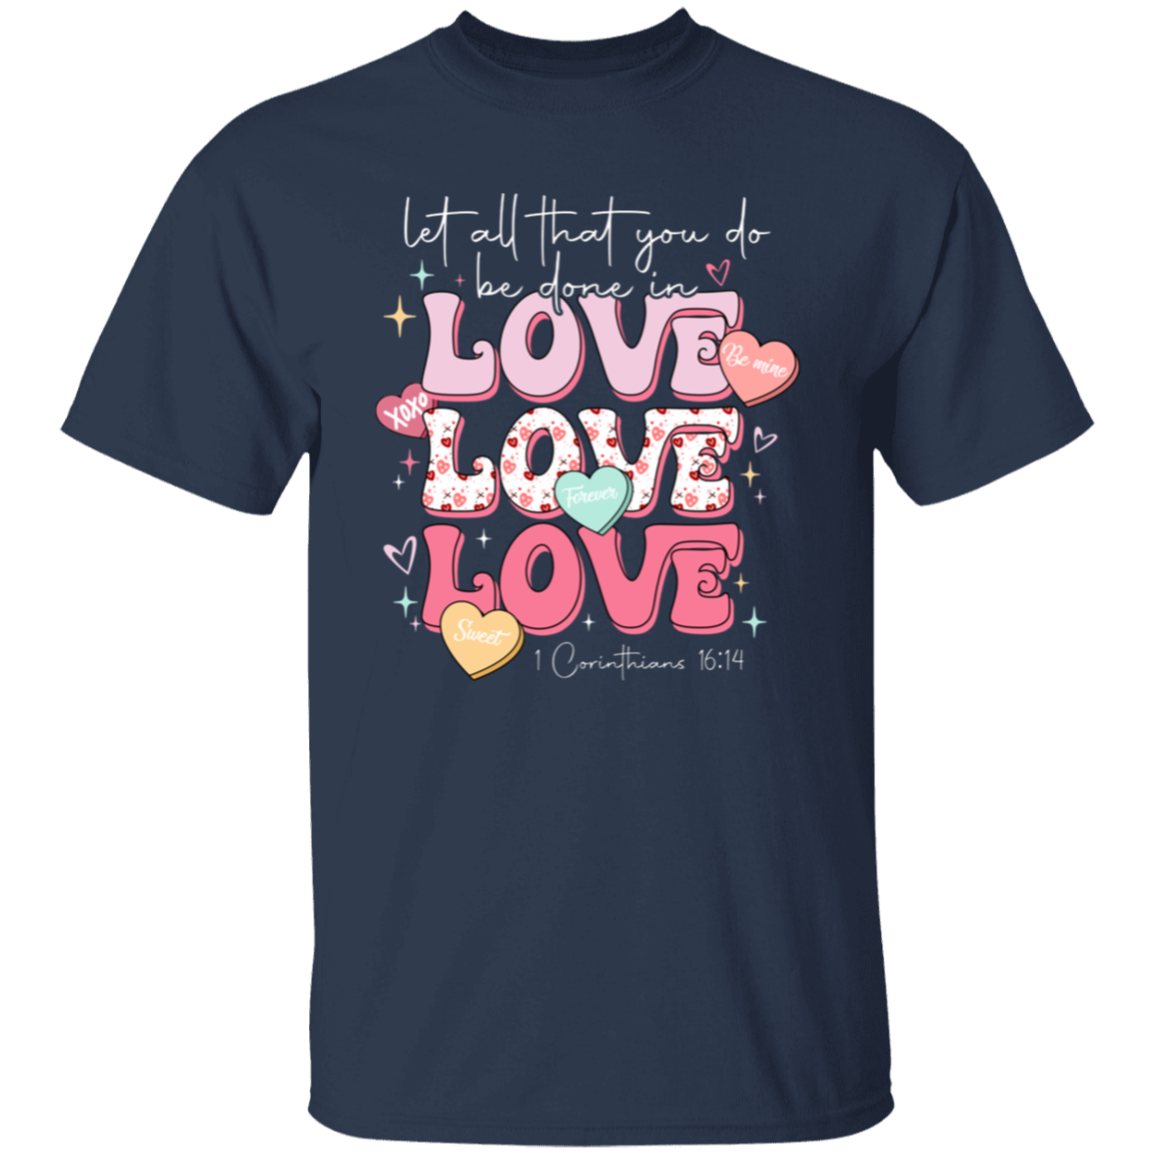 Love Corinthians T-Shirt